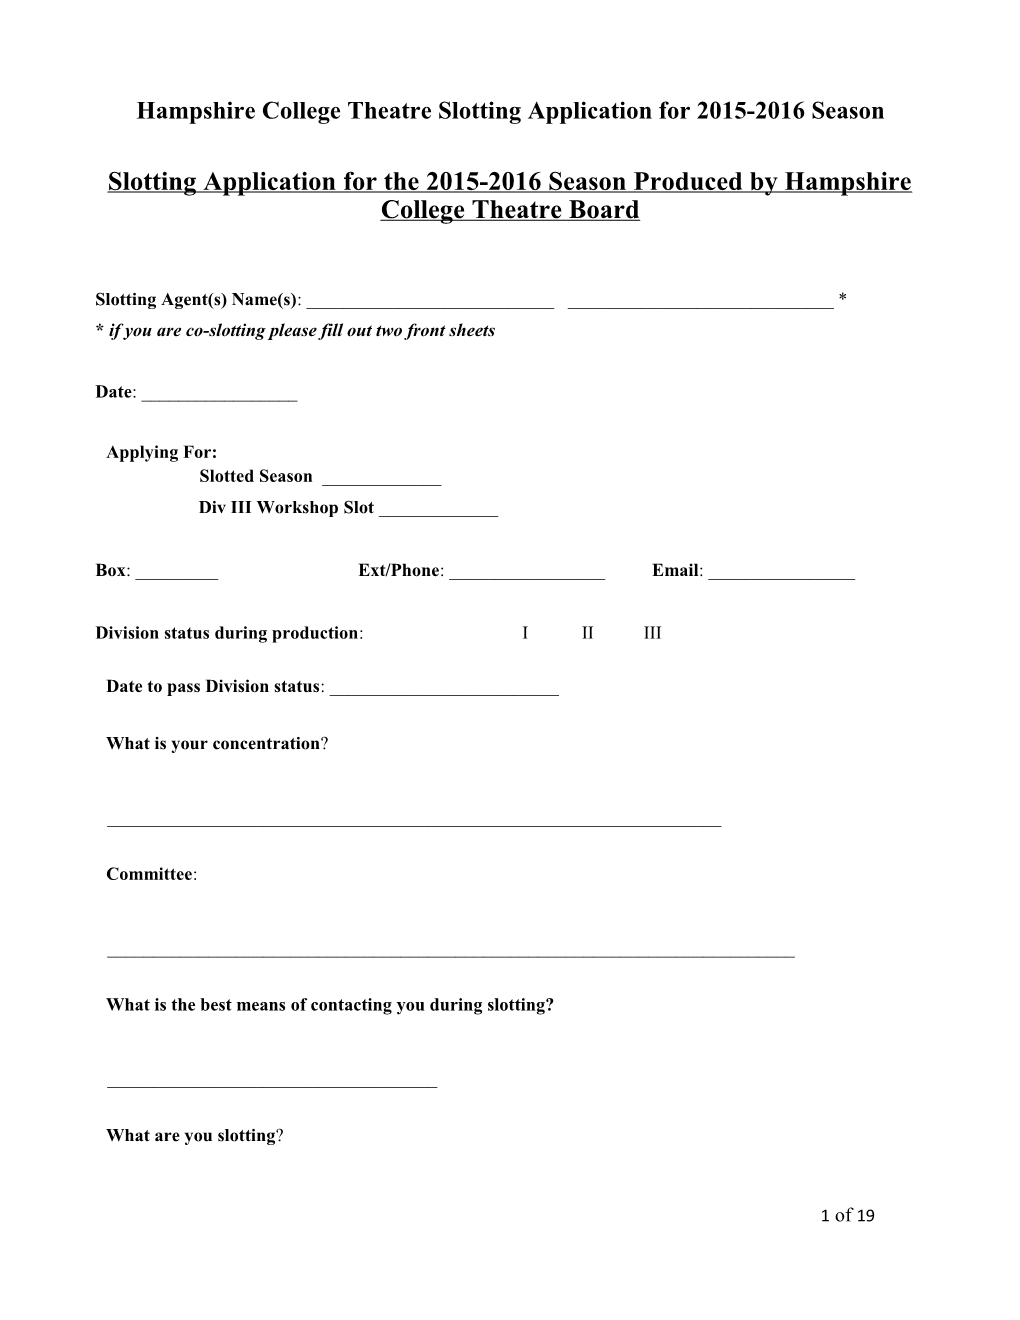 Hampshire College Theatre Slotting Application for 2015-2016 Season